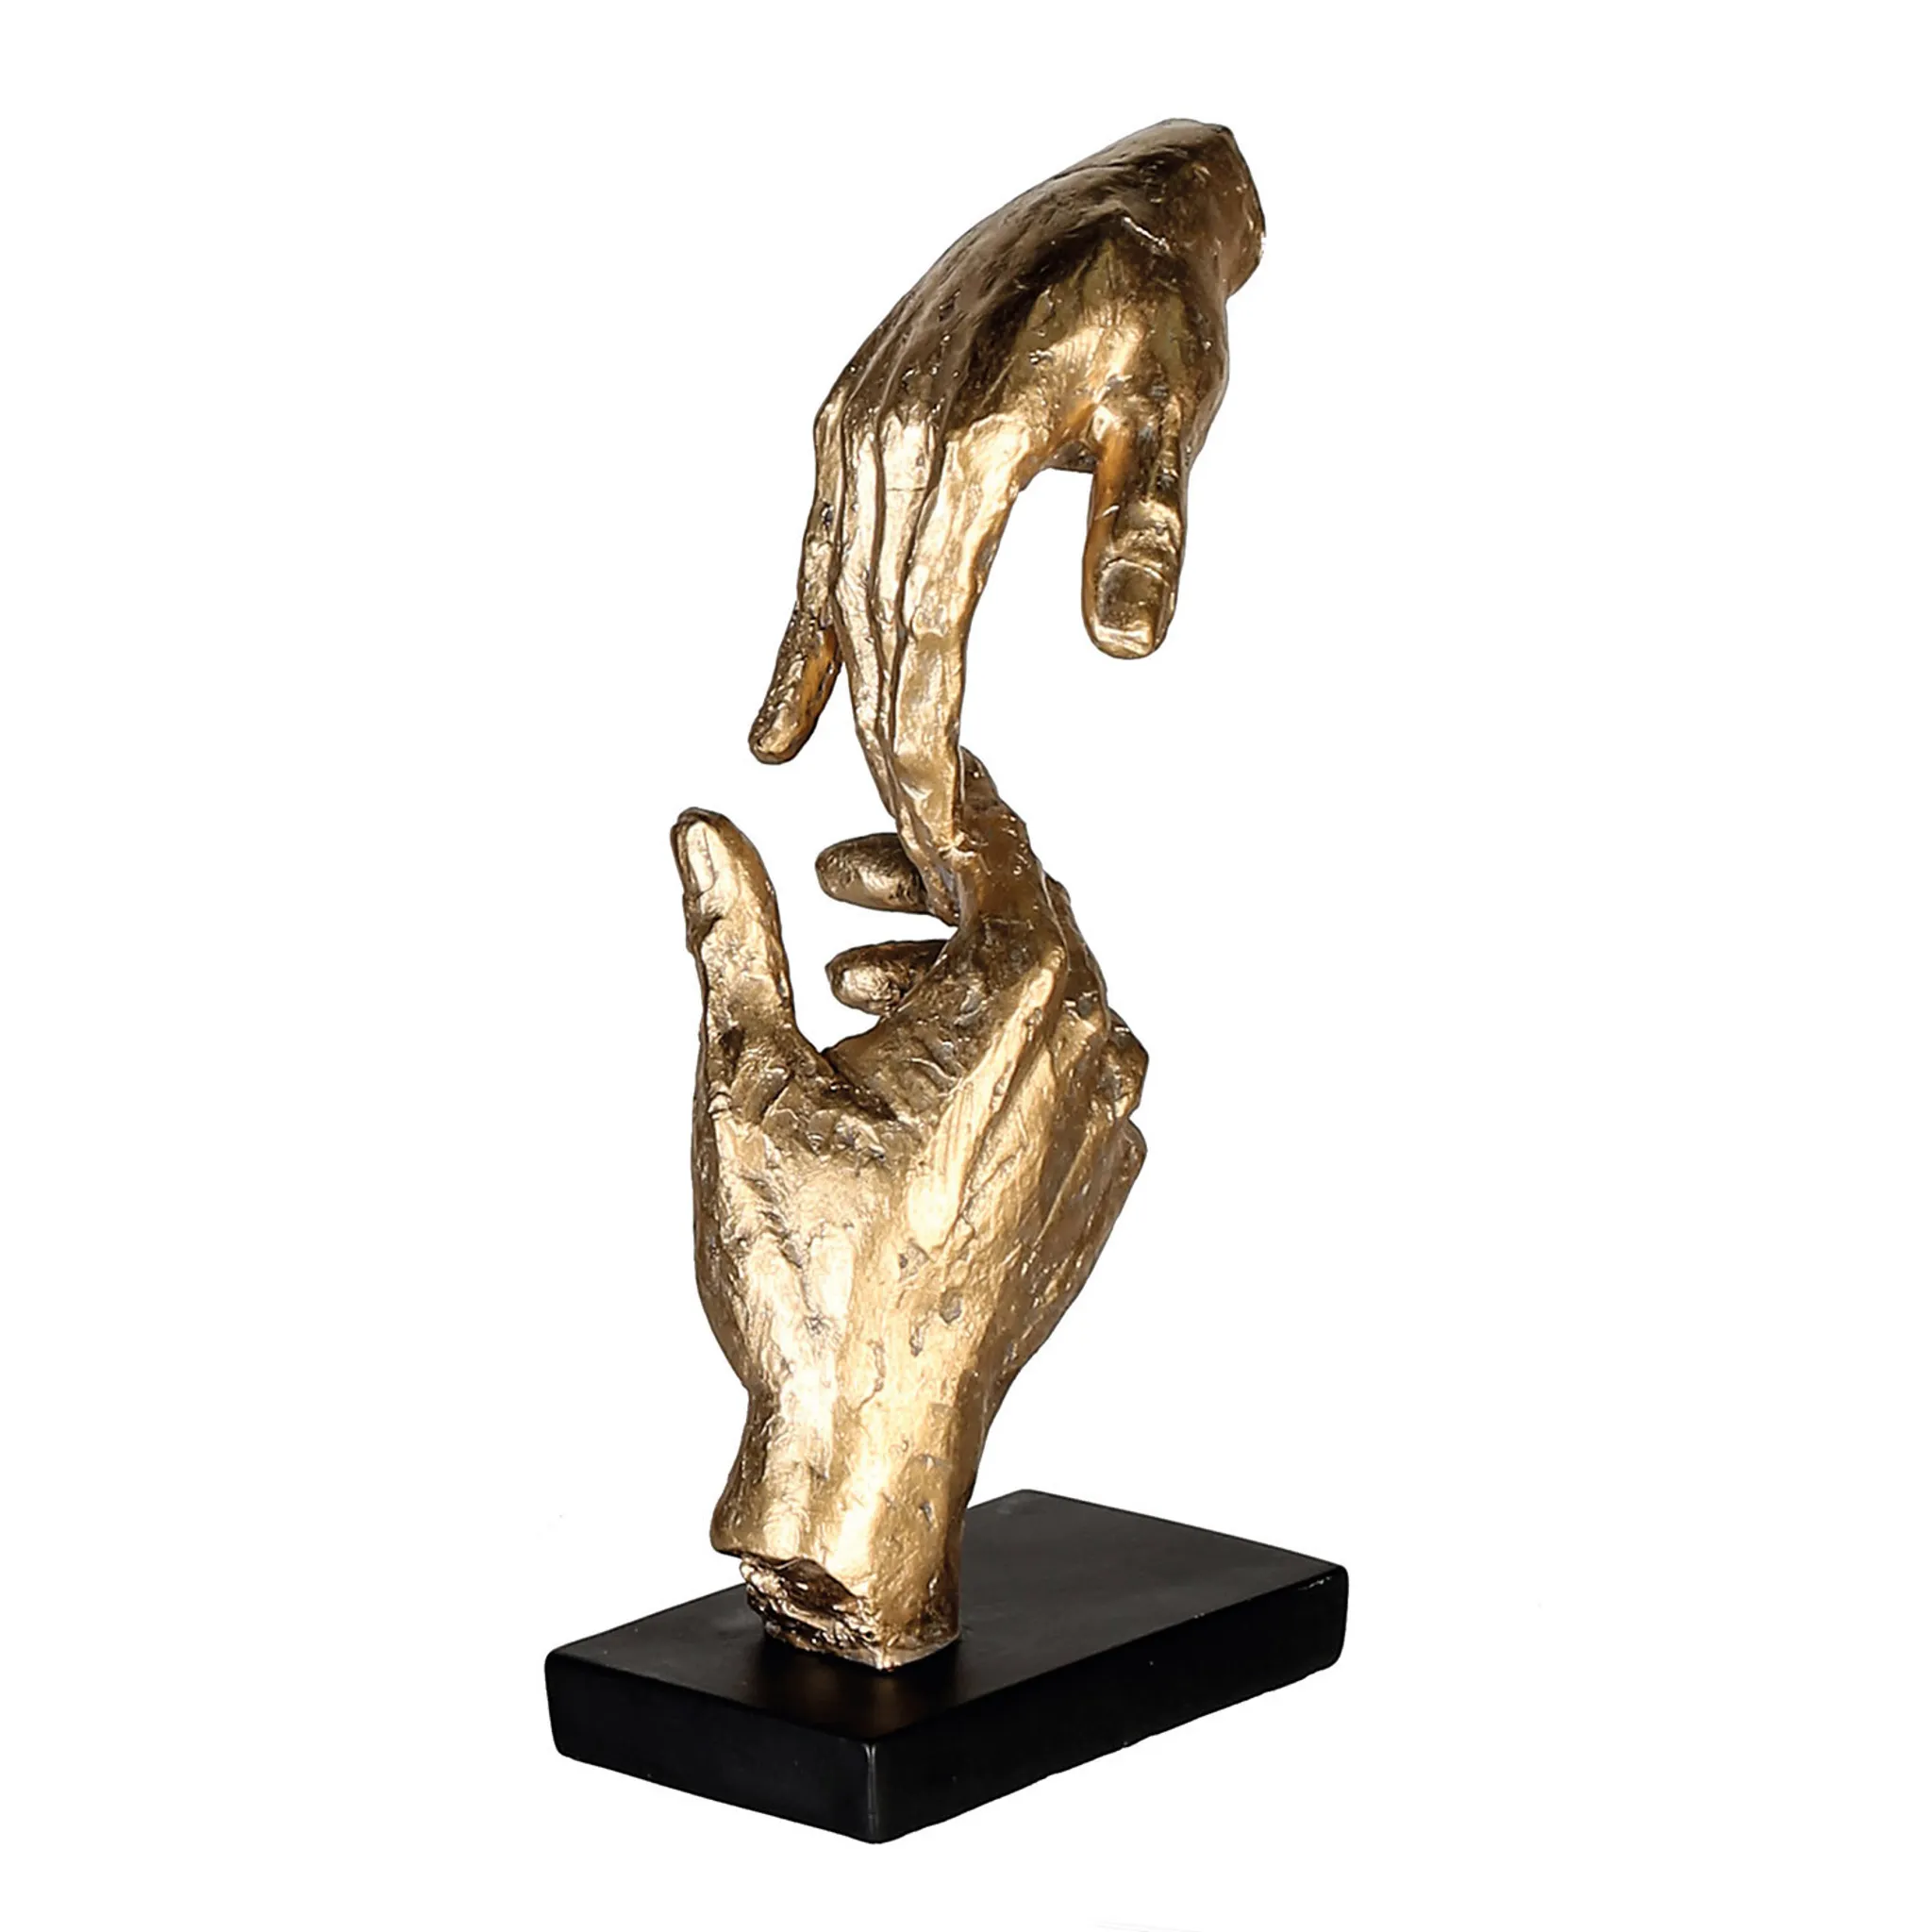 Casablanca by 29 H. Two hands cm,89228 Skulptur Dekofigur Gilde